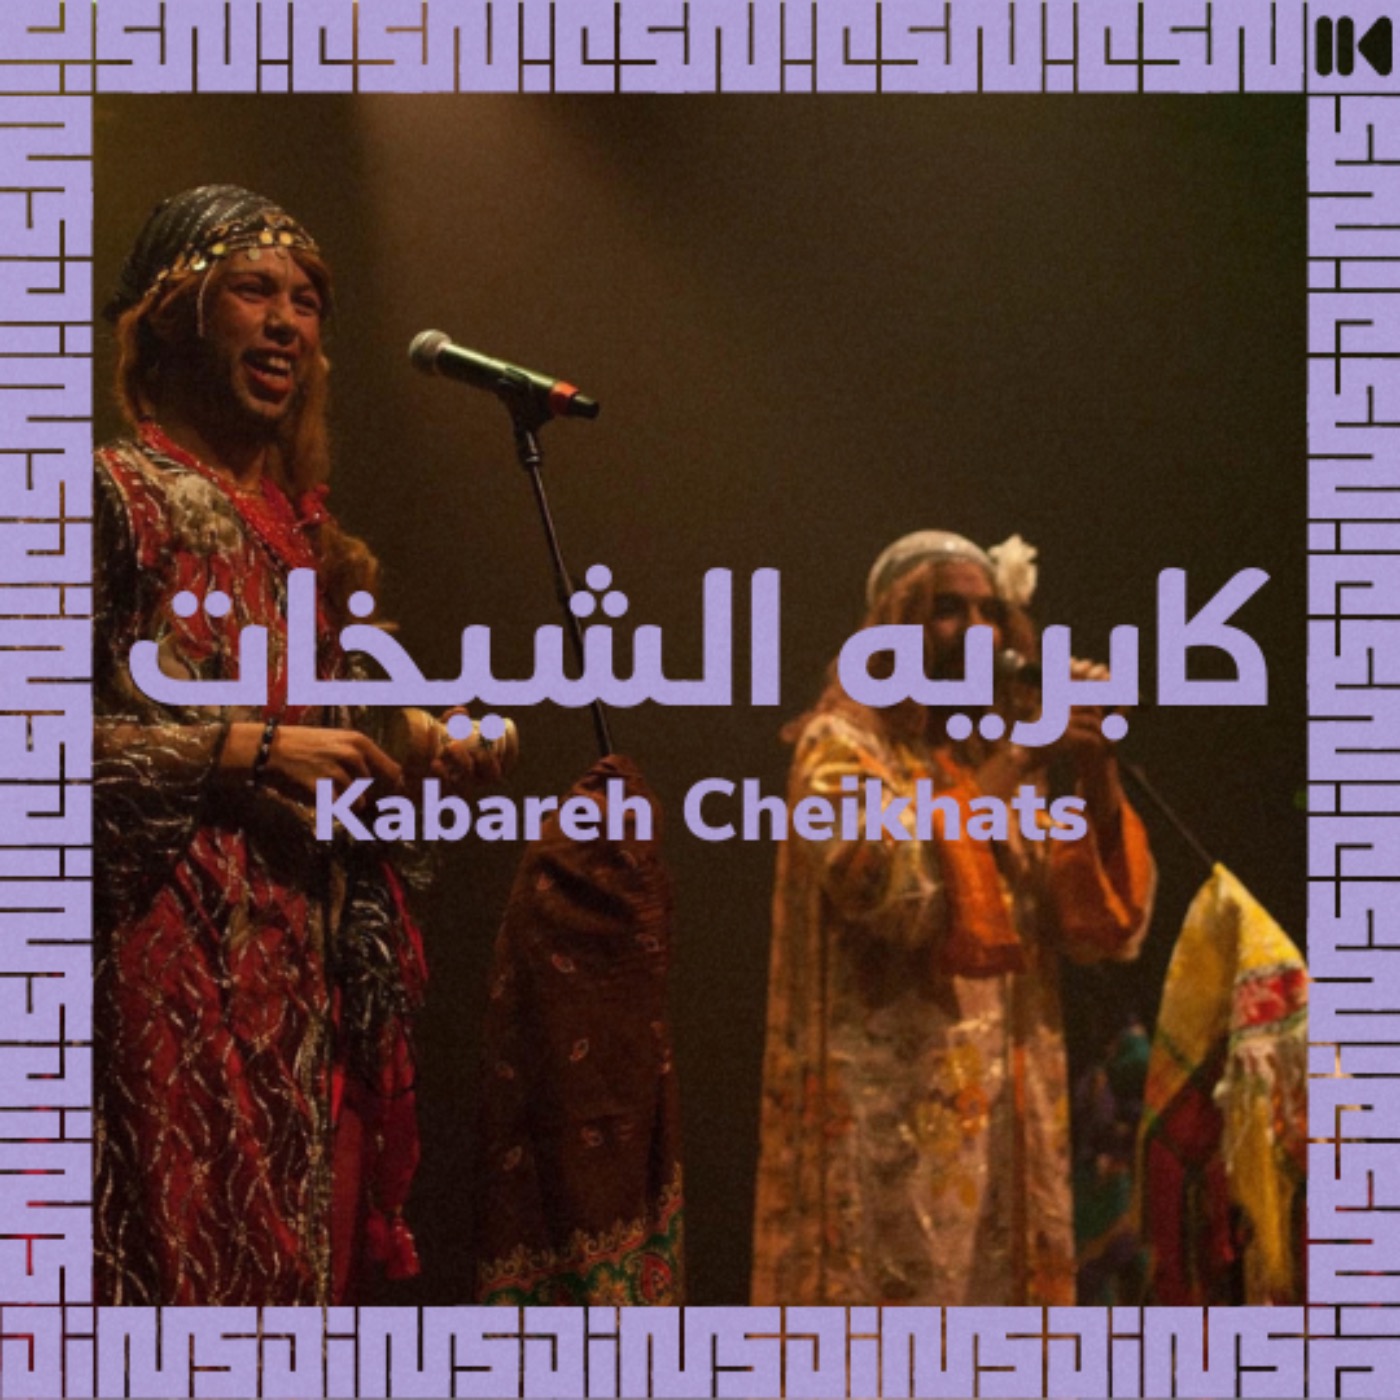 EP 20 : Les « Cheikhates », grandes figures féministes du Maghreb - avec KABAREH CHEIKHATS